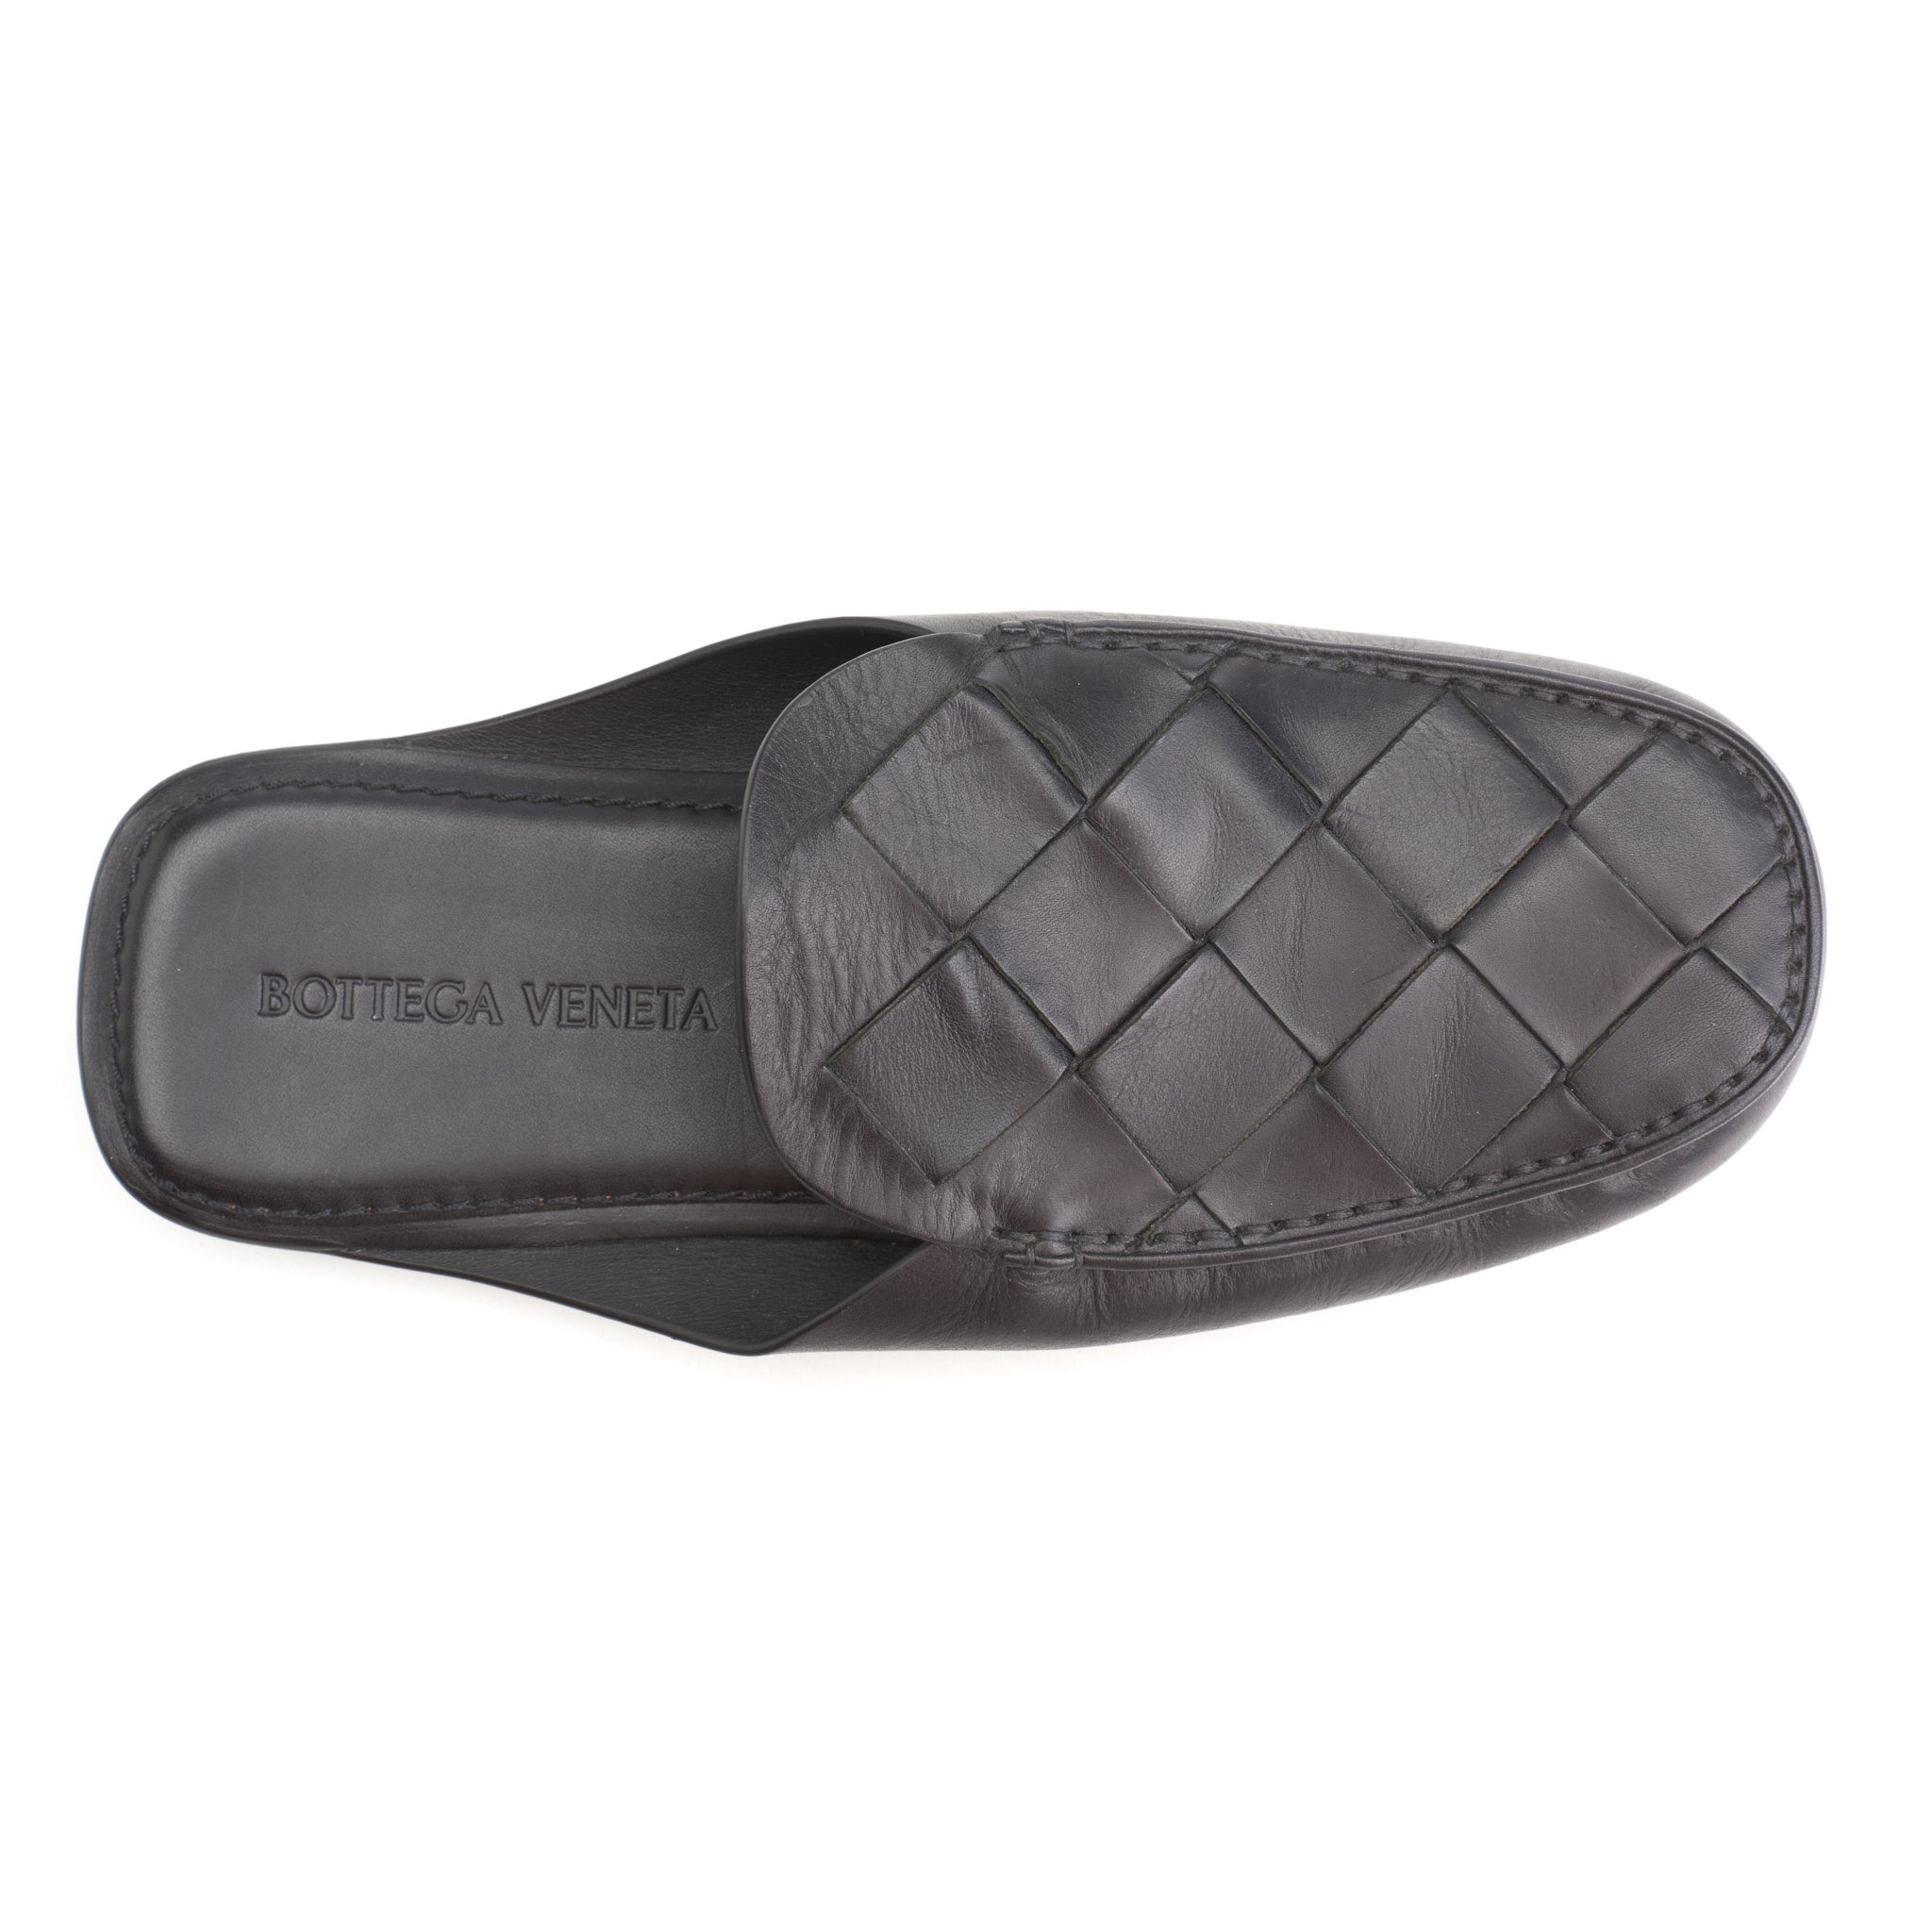 BOTTEGA VENETA Black Woven Calfskin Leather Slipper Shoes EU 39.5 NEW US 6.5 BOTTEGA VENETA